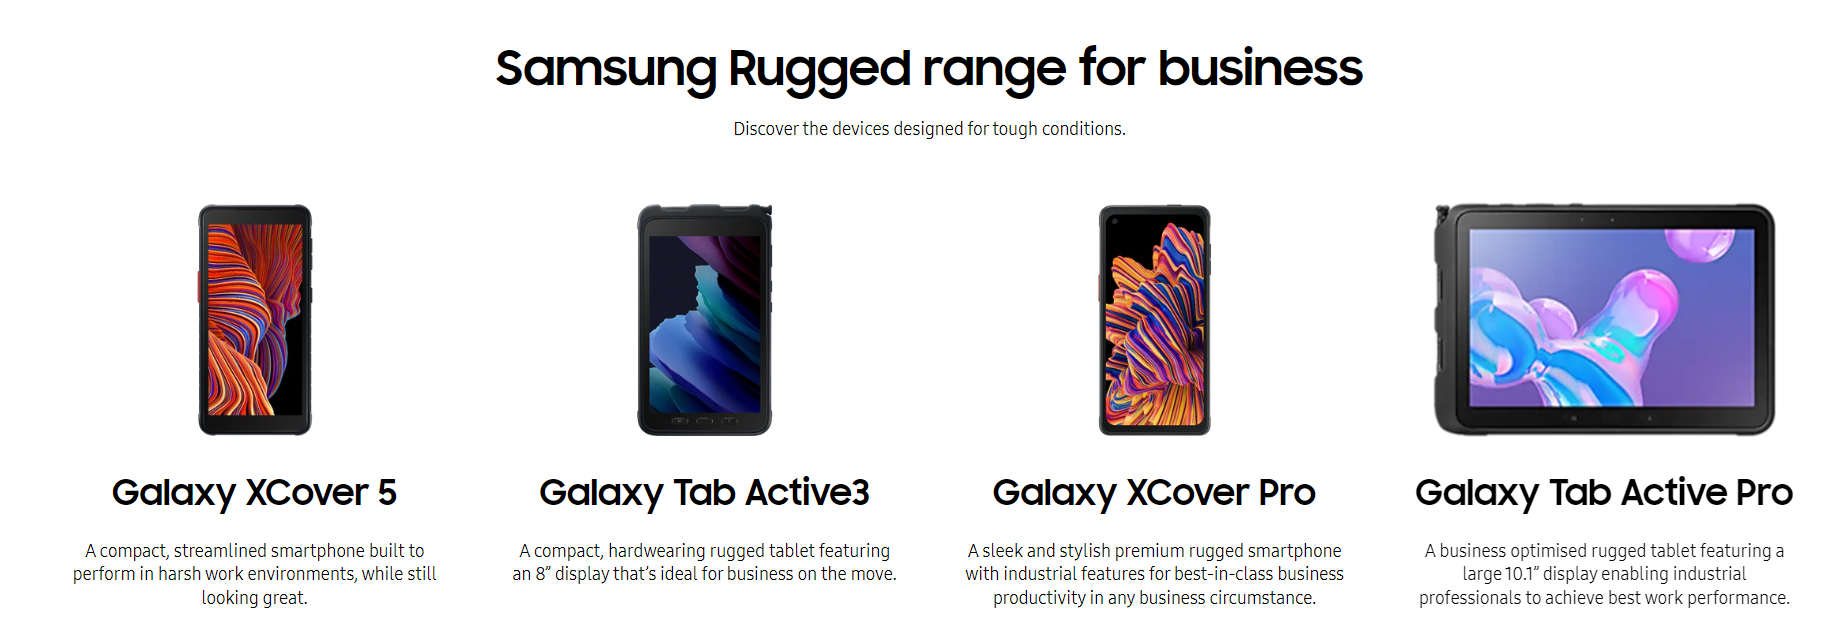 Samsung rugged range for business